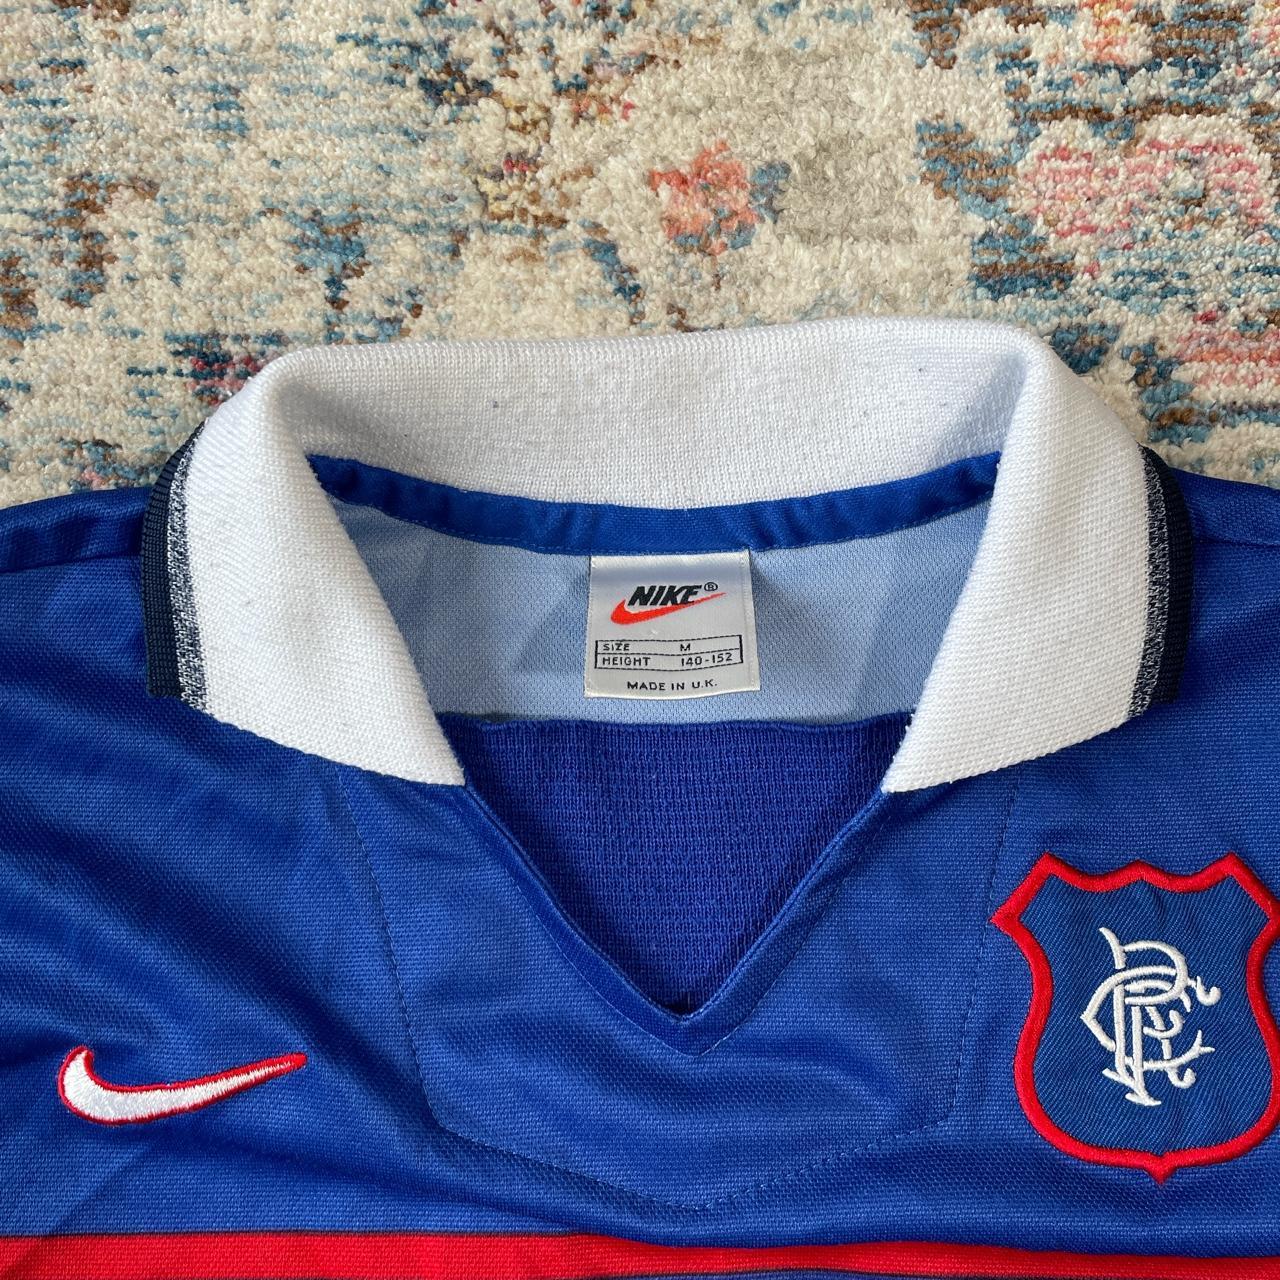 Retro Rangers Nike 1997/98 Home Football Shirt